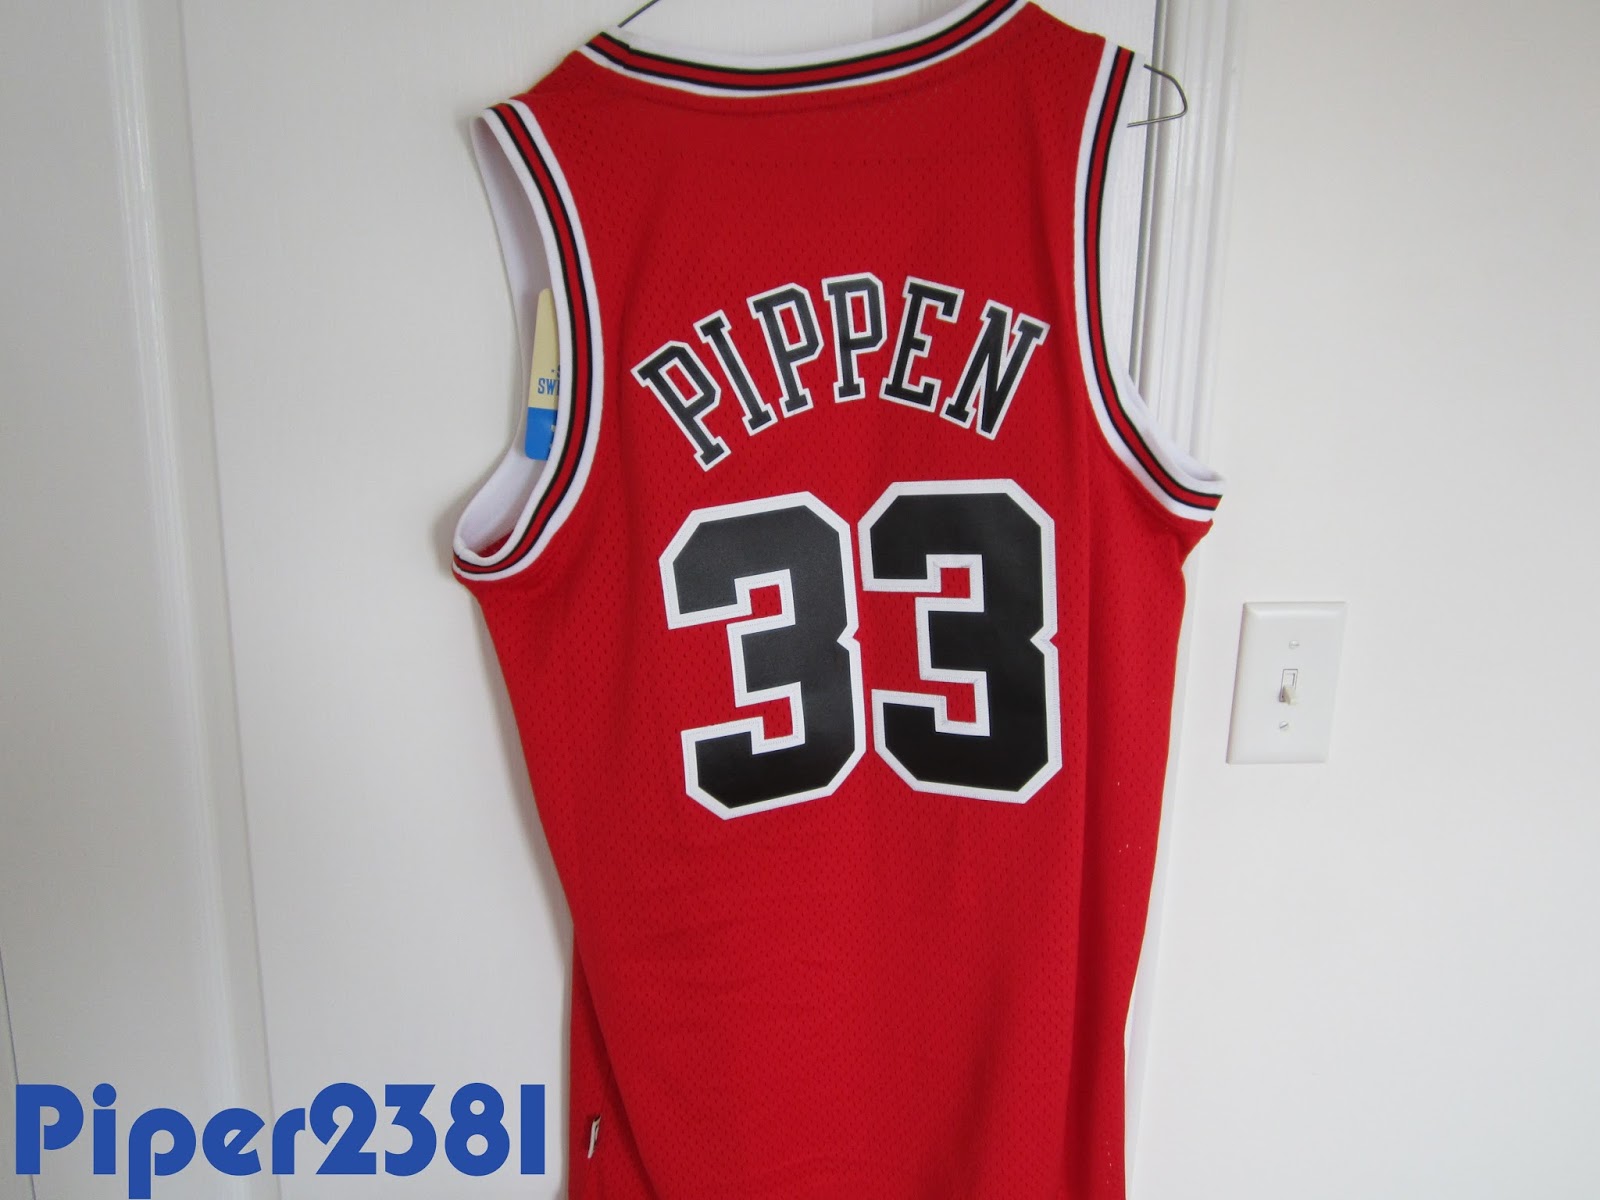 Piper2381: Adidas Scottie Pippen Jersey